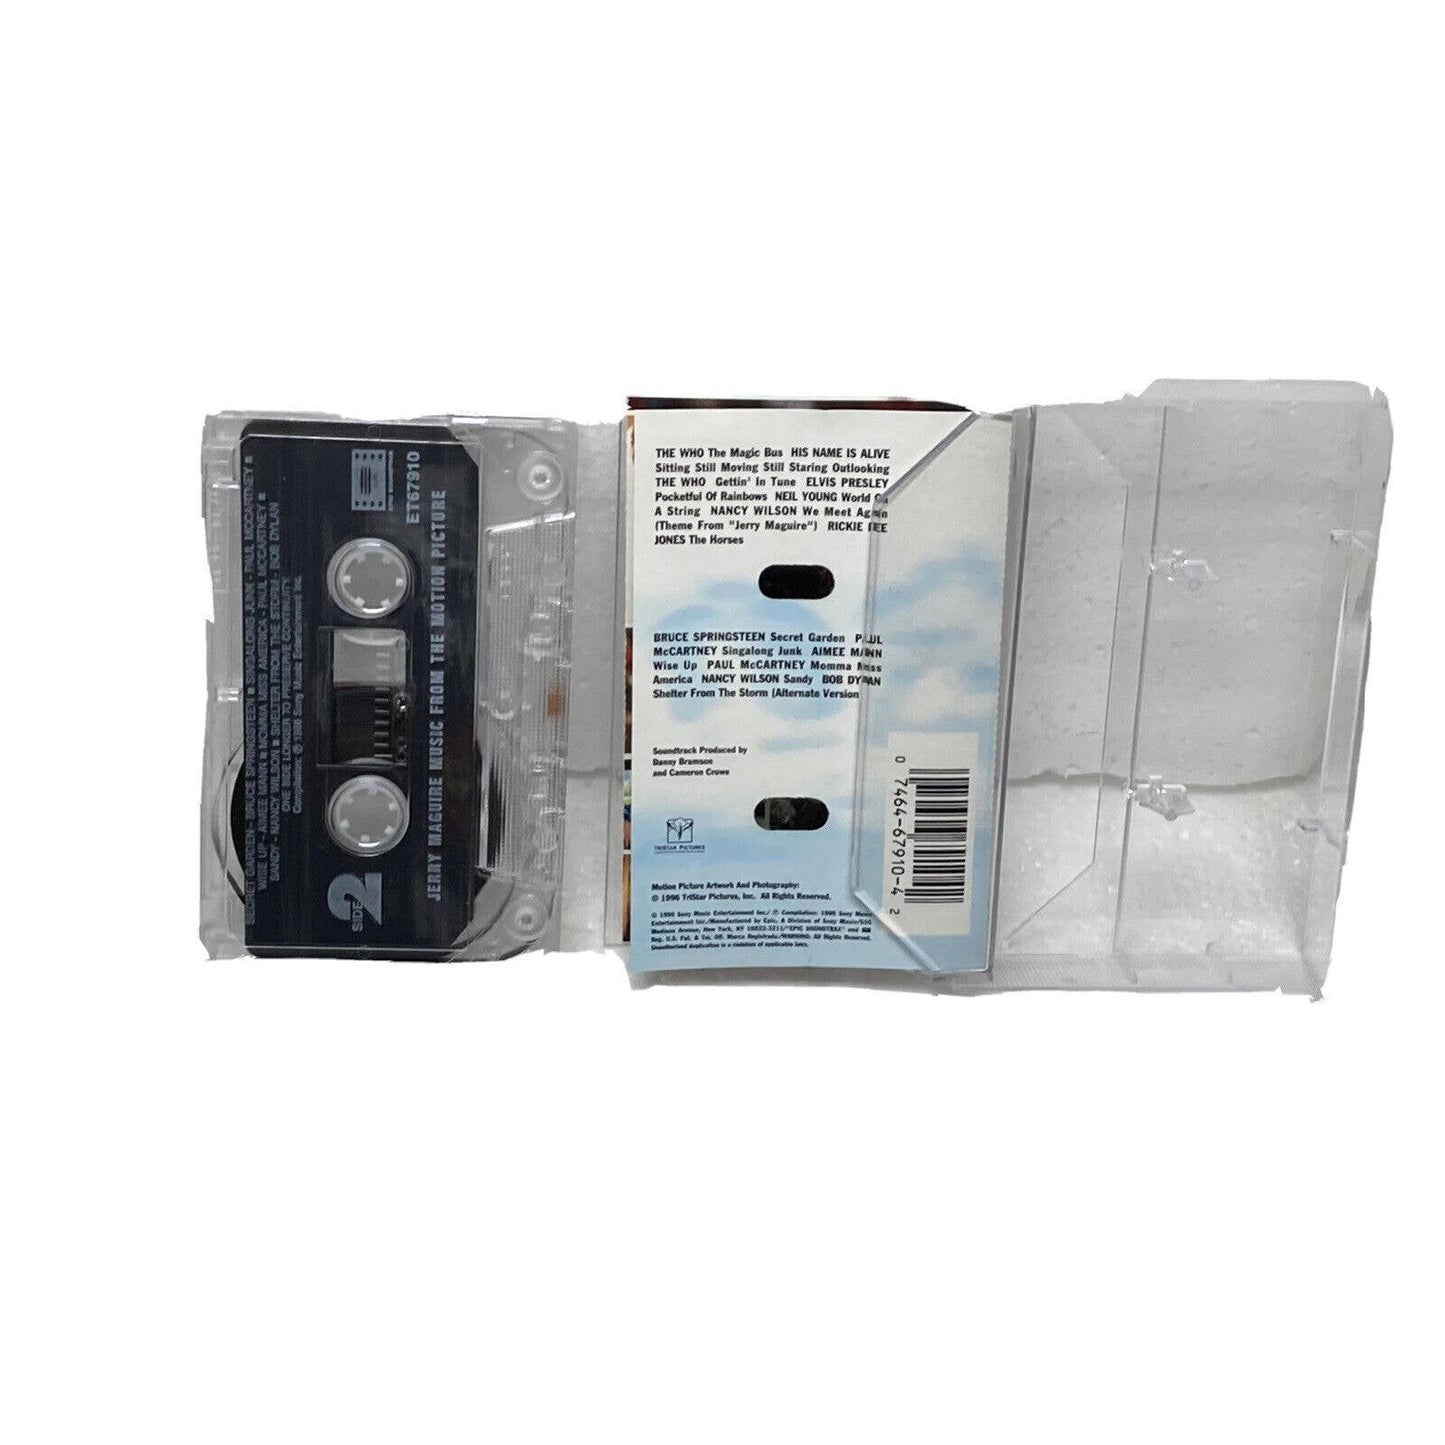 Jerry Mcguire Motion Picture Soundtrack Cassette Tape Vintage Springsteen